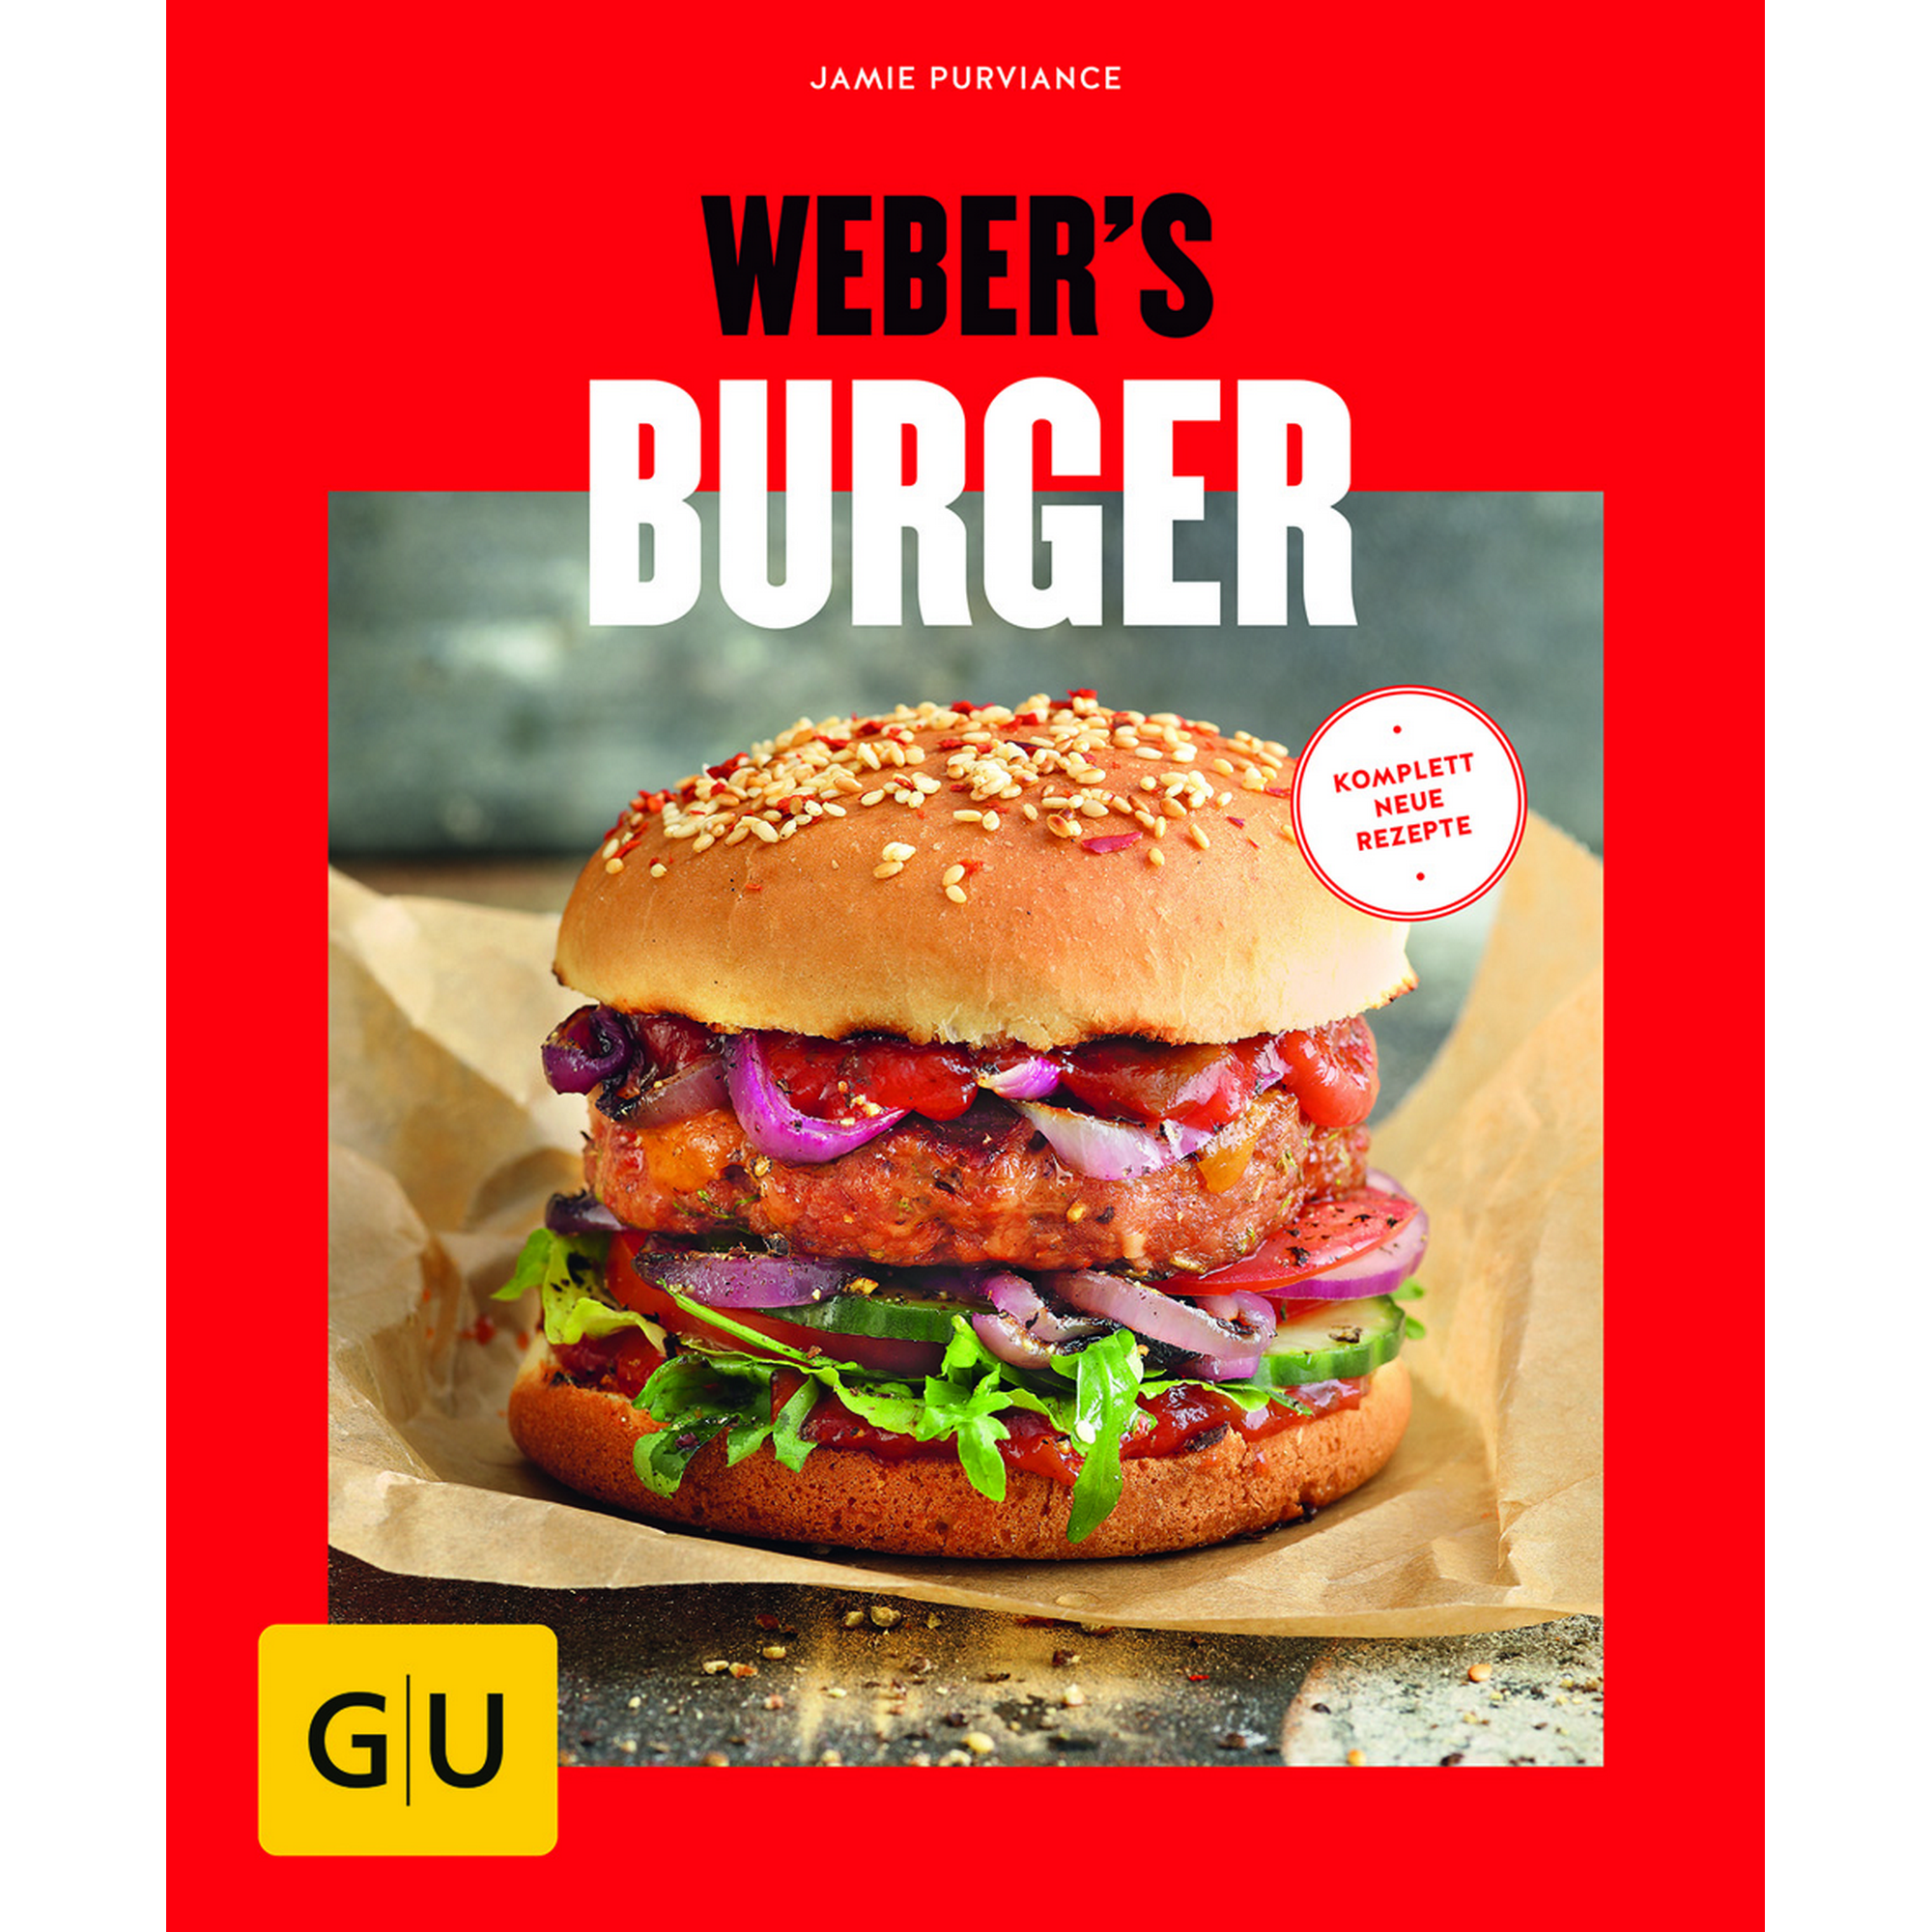 Grillbuch Jamie Purviance 'Weber's Burger: Komplett neue Rezepte' + product picture